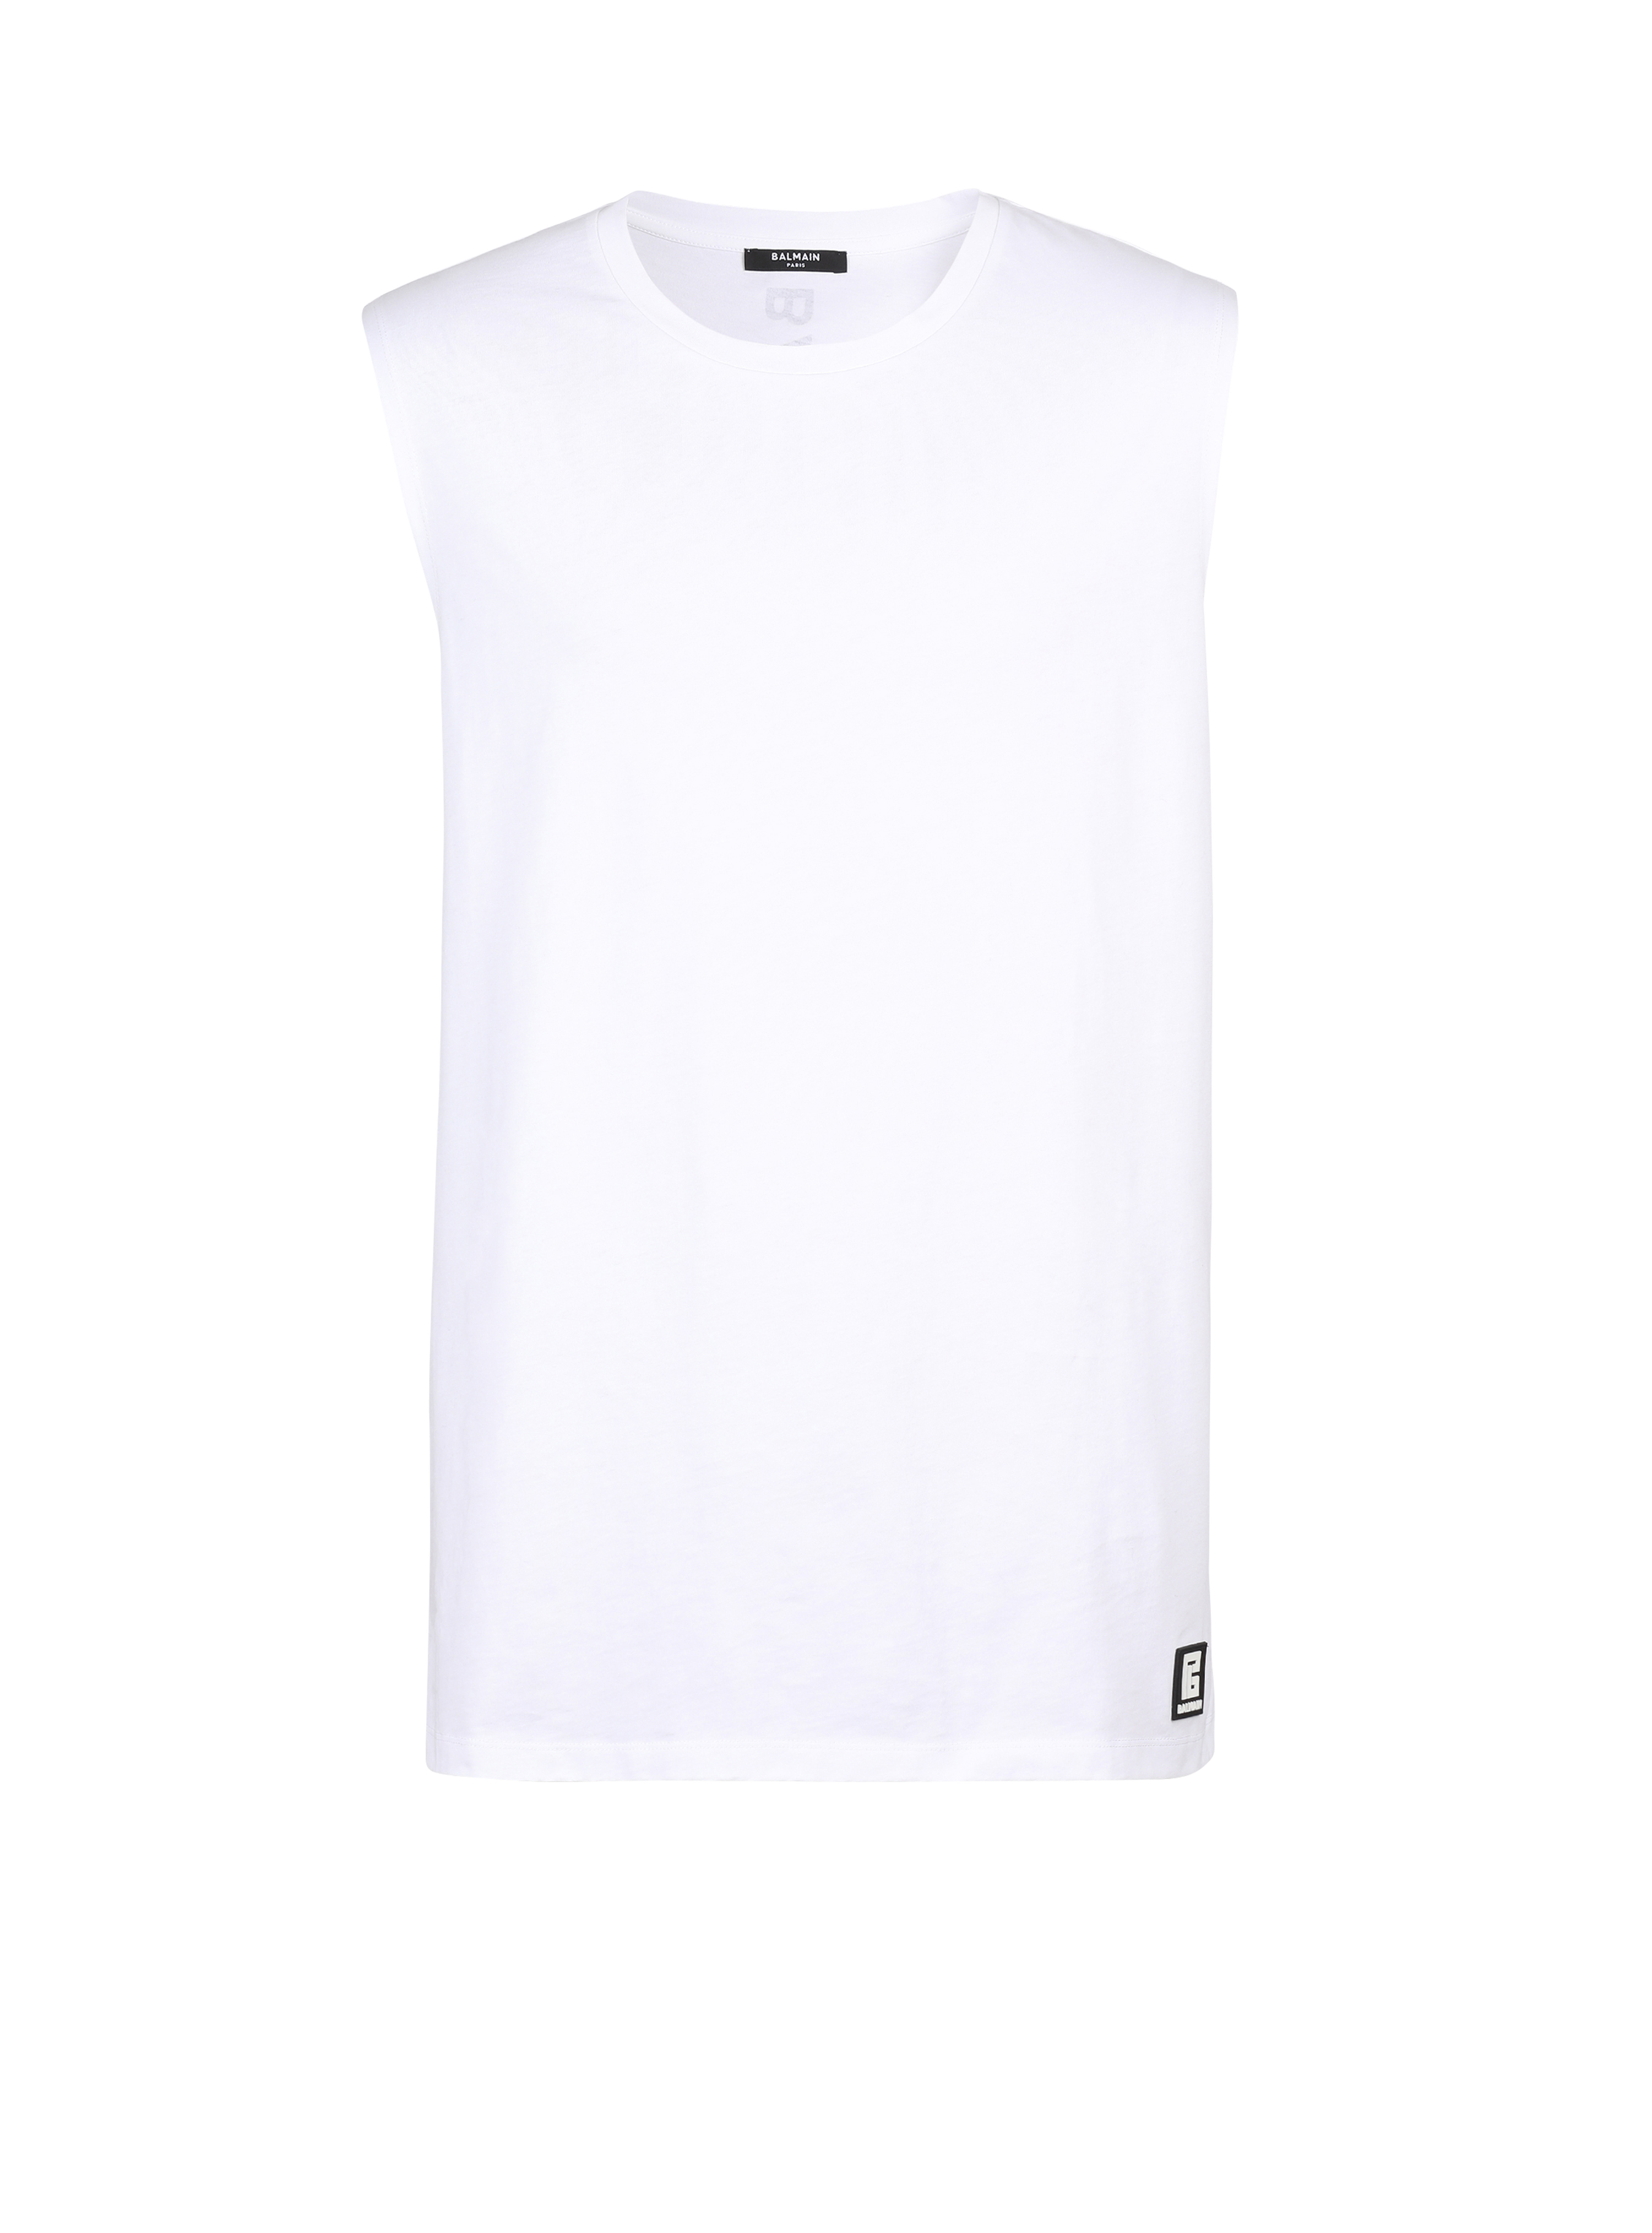 Cotton T-shirt with Balmain logo print, white